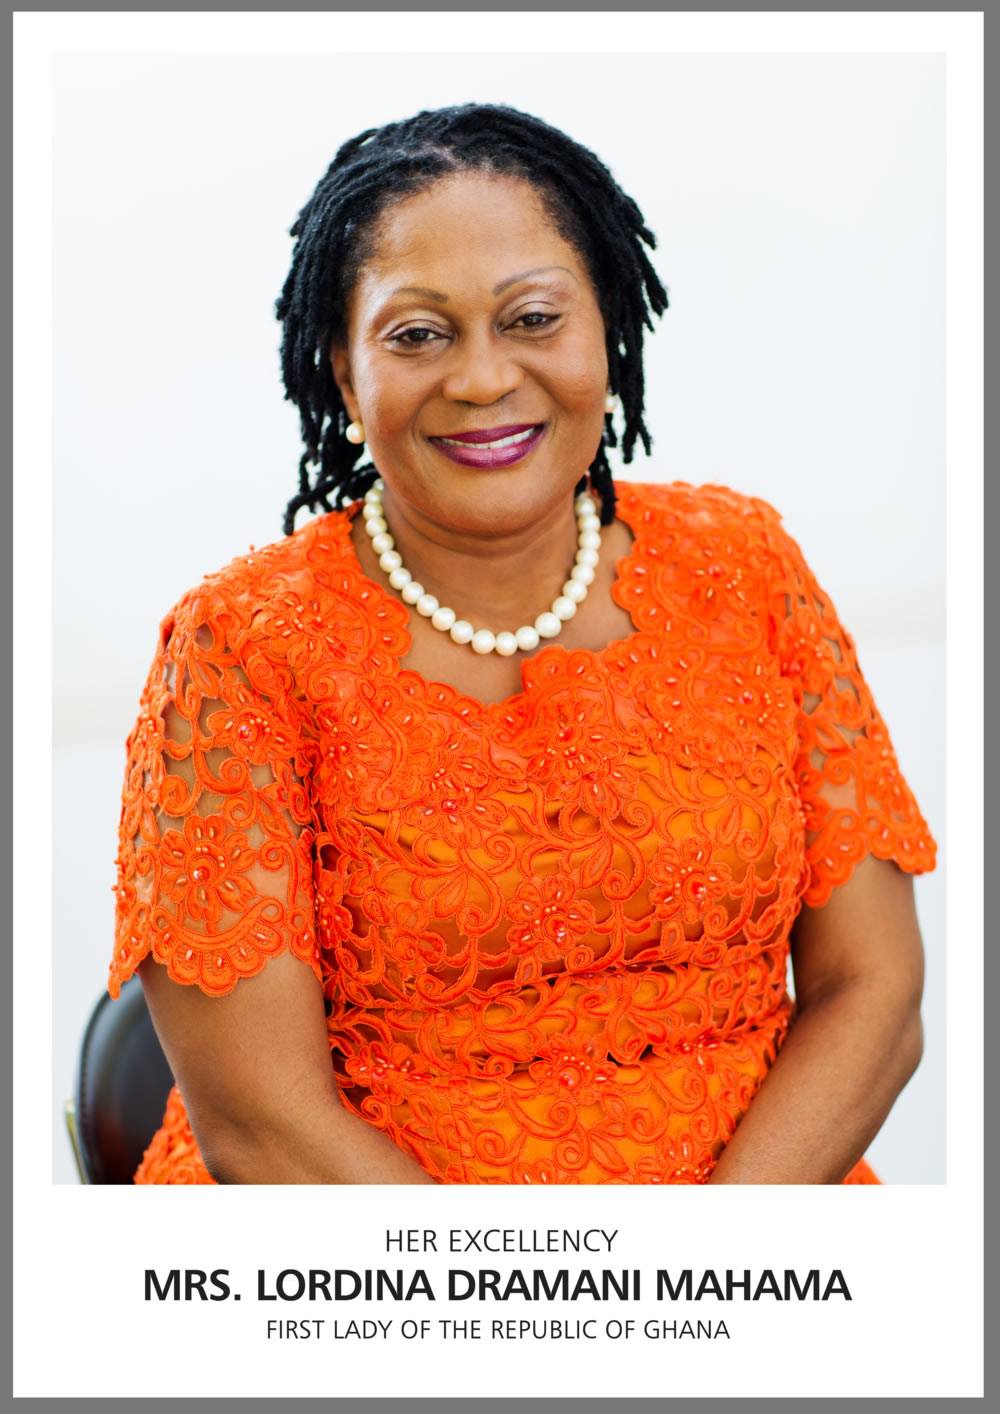 Lordina Mahama is a former First Lady of Ghana